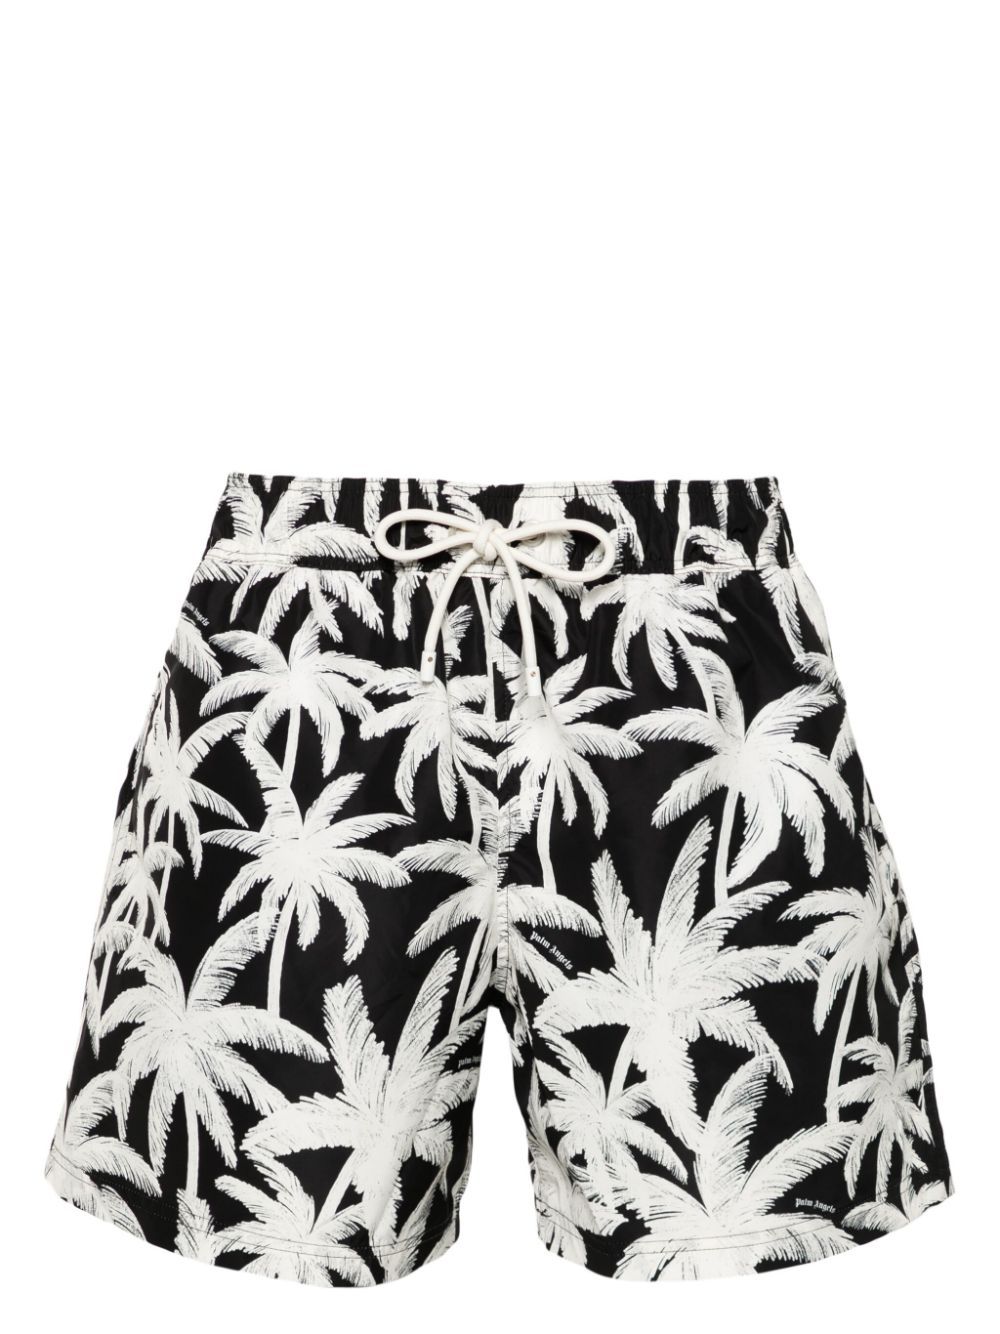 Palm tree print shorts<BR/><BR/>